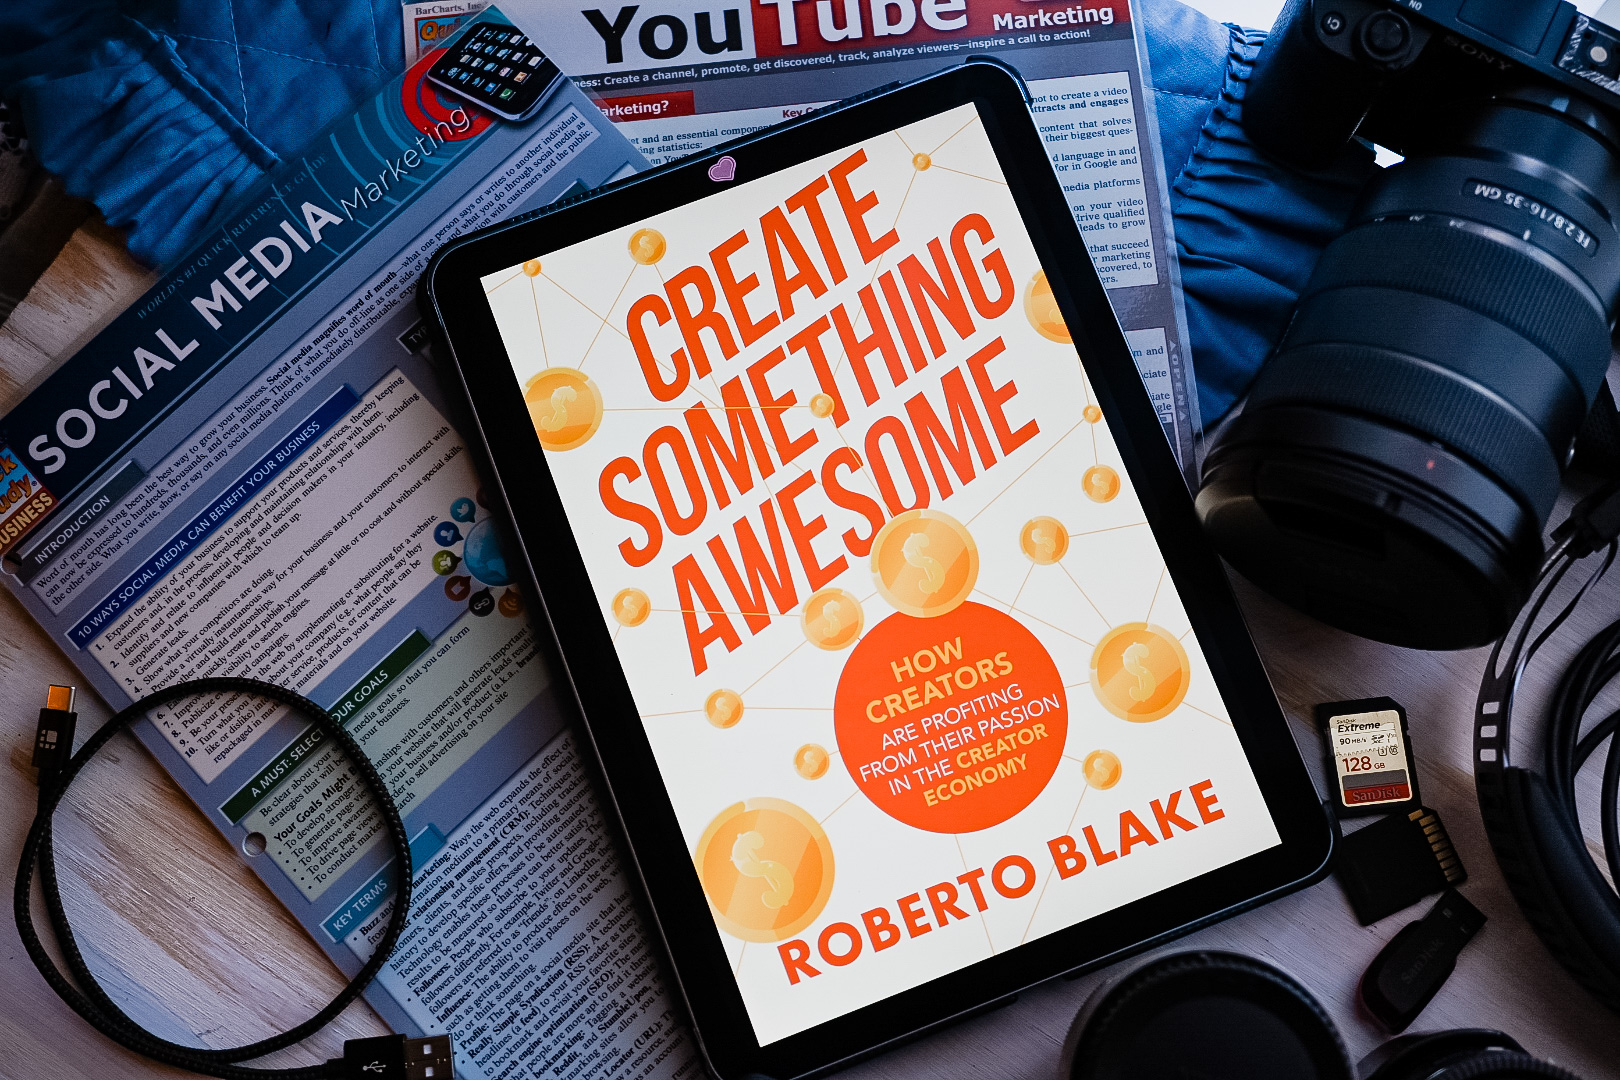 Create Something Awesome by Roberto Blake